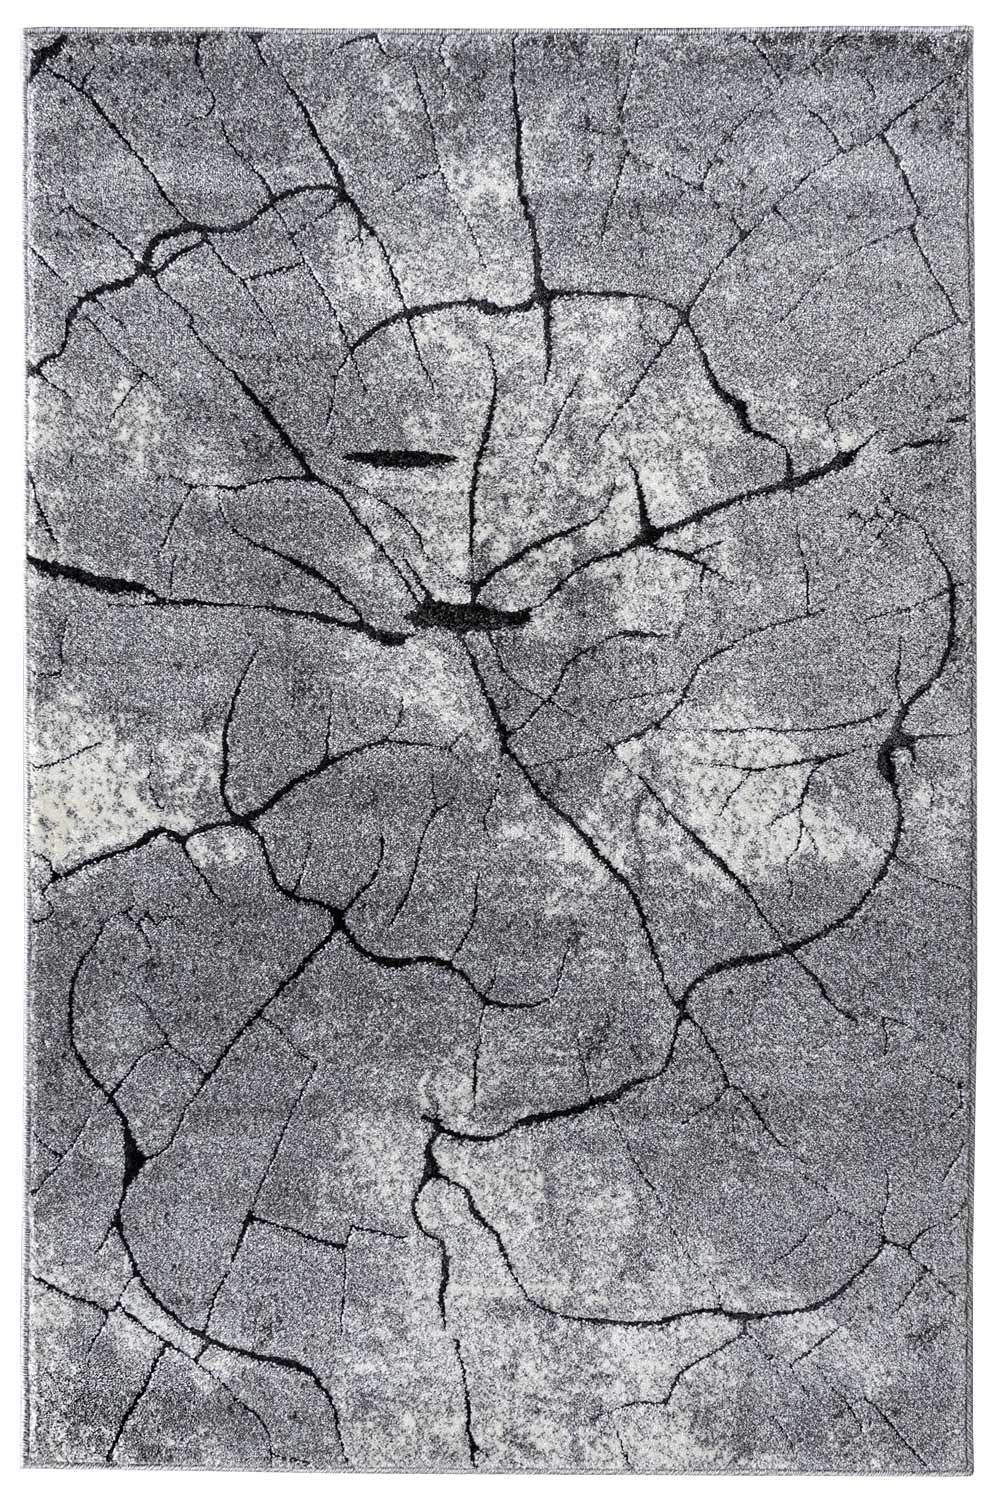 Kusový koberec MIAMI 129 Grey 120x180 cm